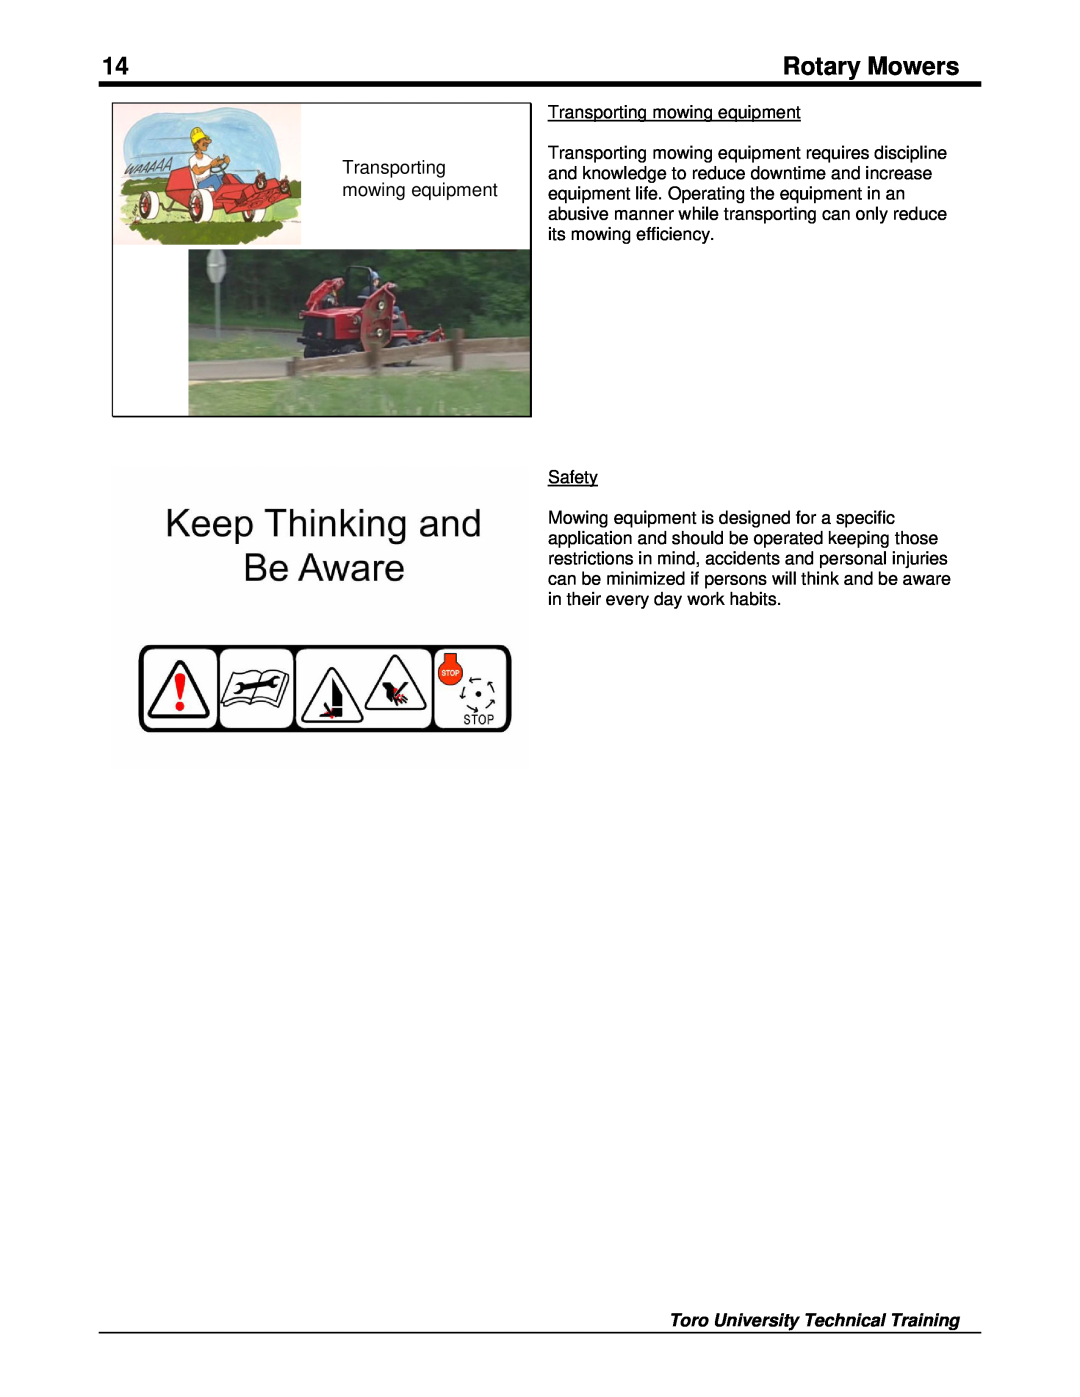 Toro 09167SL manual Rotary Mowers, Transporting mowing equipment, Toro University Technical Training 